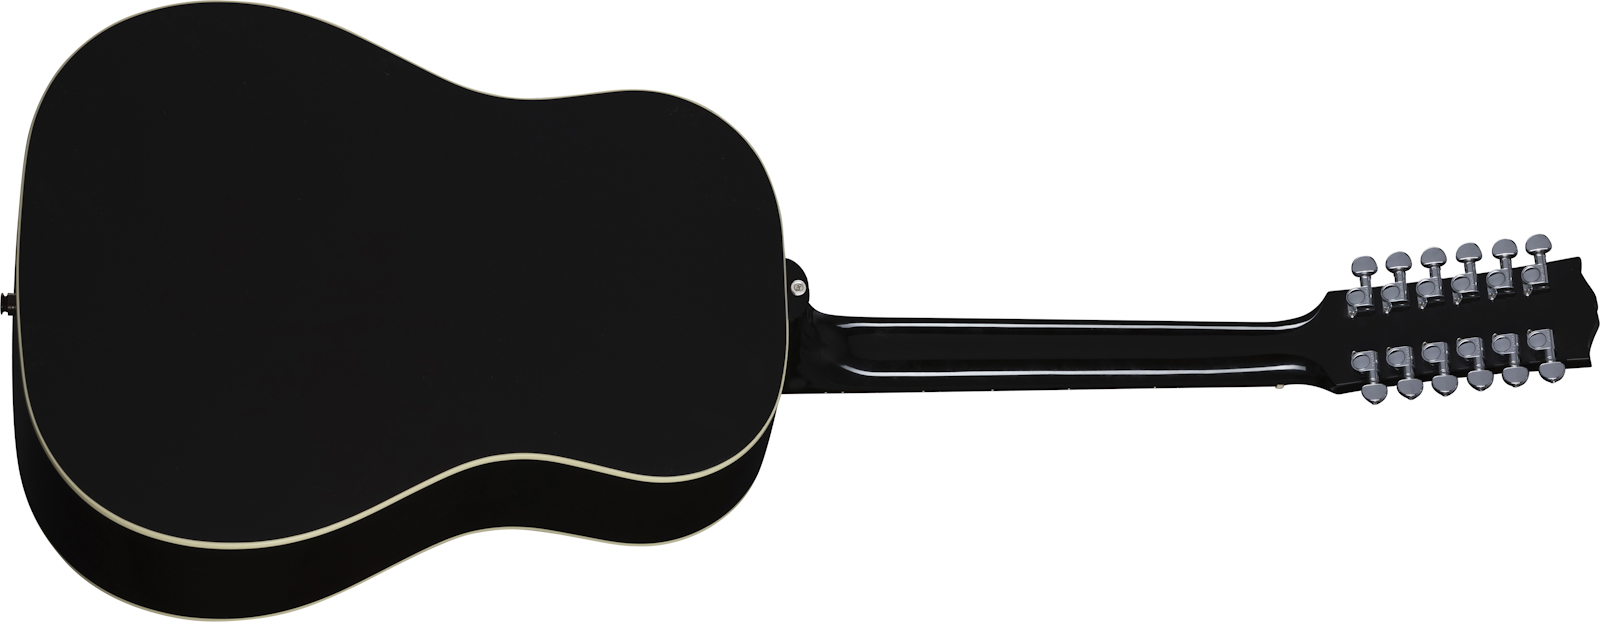 Gibson J-45 Standard 12-string Modern Dreadnought 12c Epicea Acajou Rw - Vintage Sunburst - Elektroakustische Gitarre - Variation 1